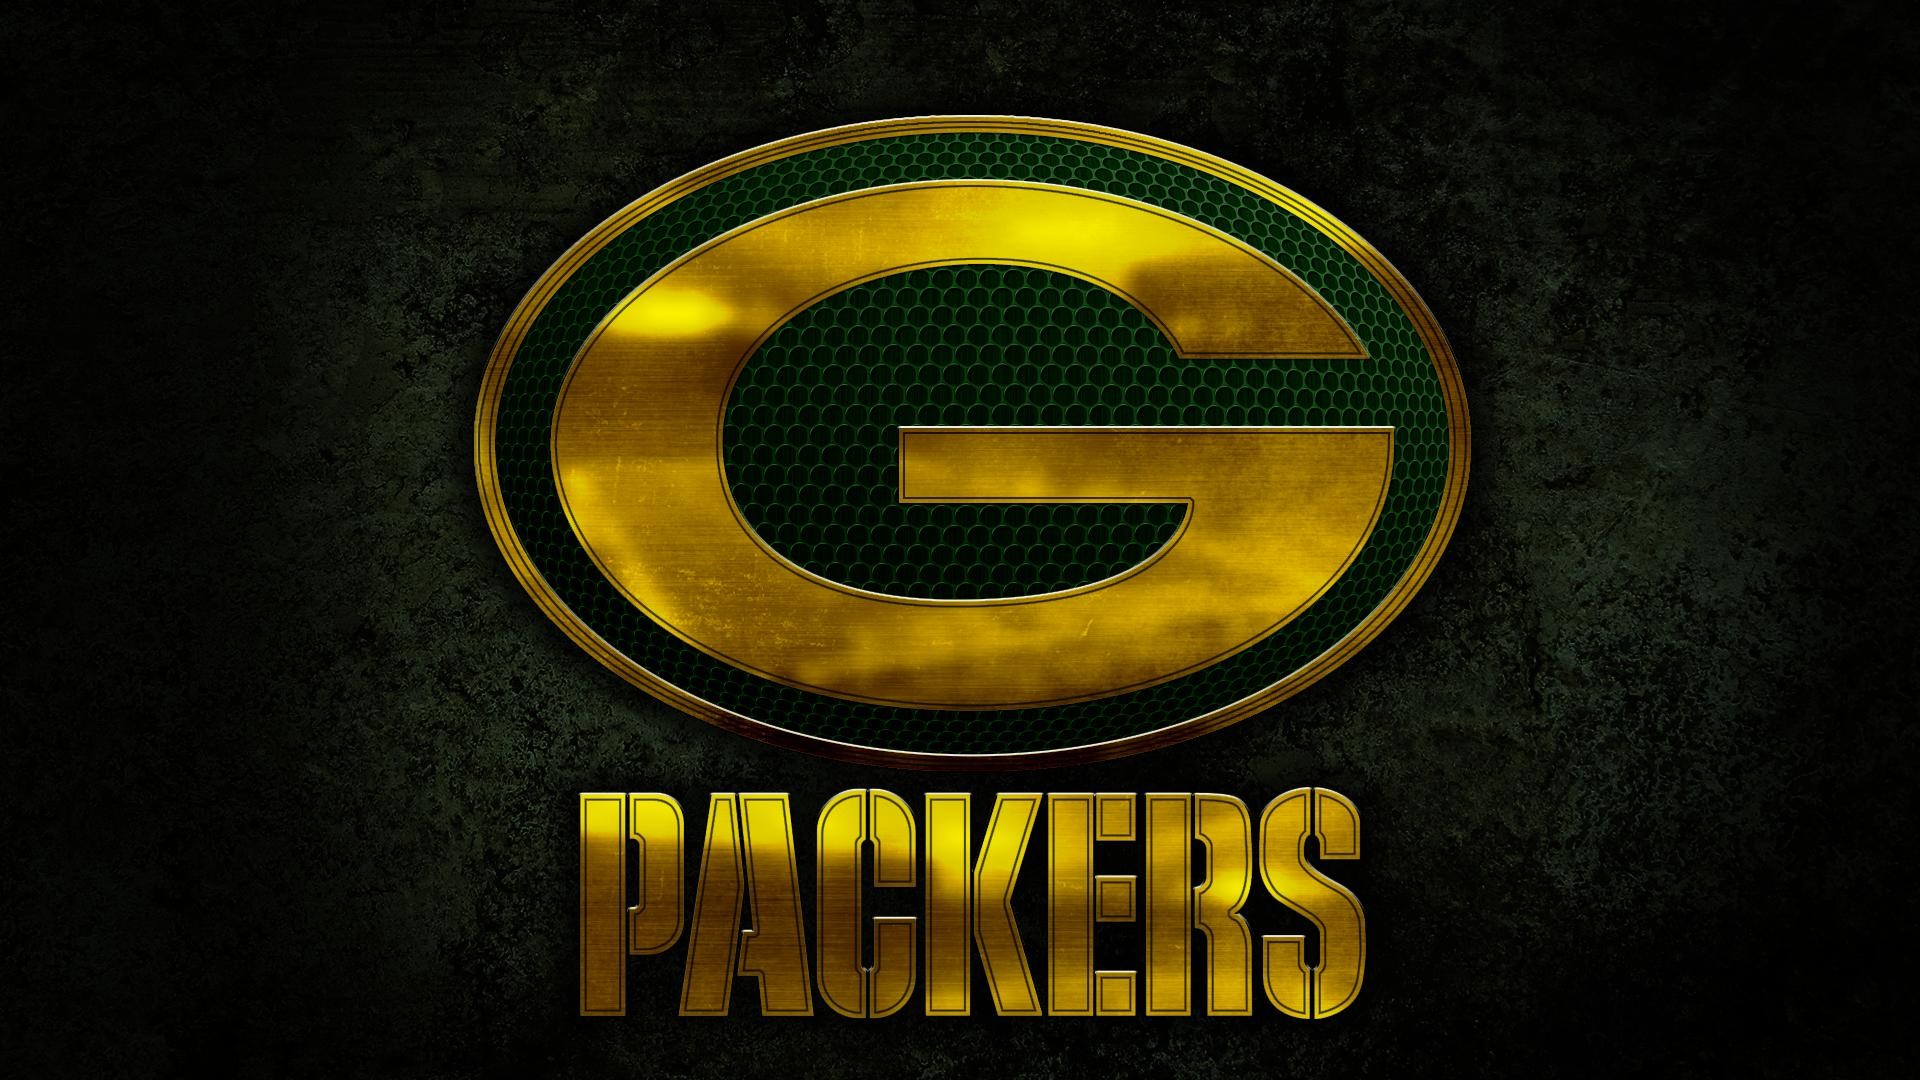 Green Bay Packers Football Wallpaper Image